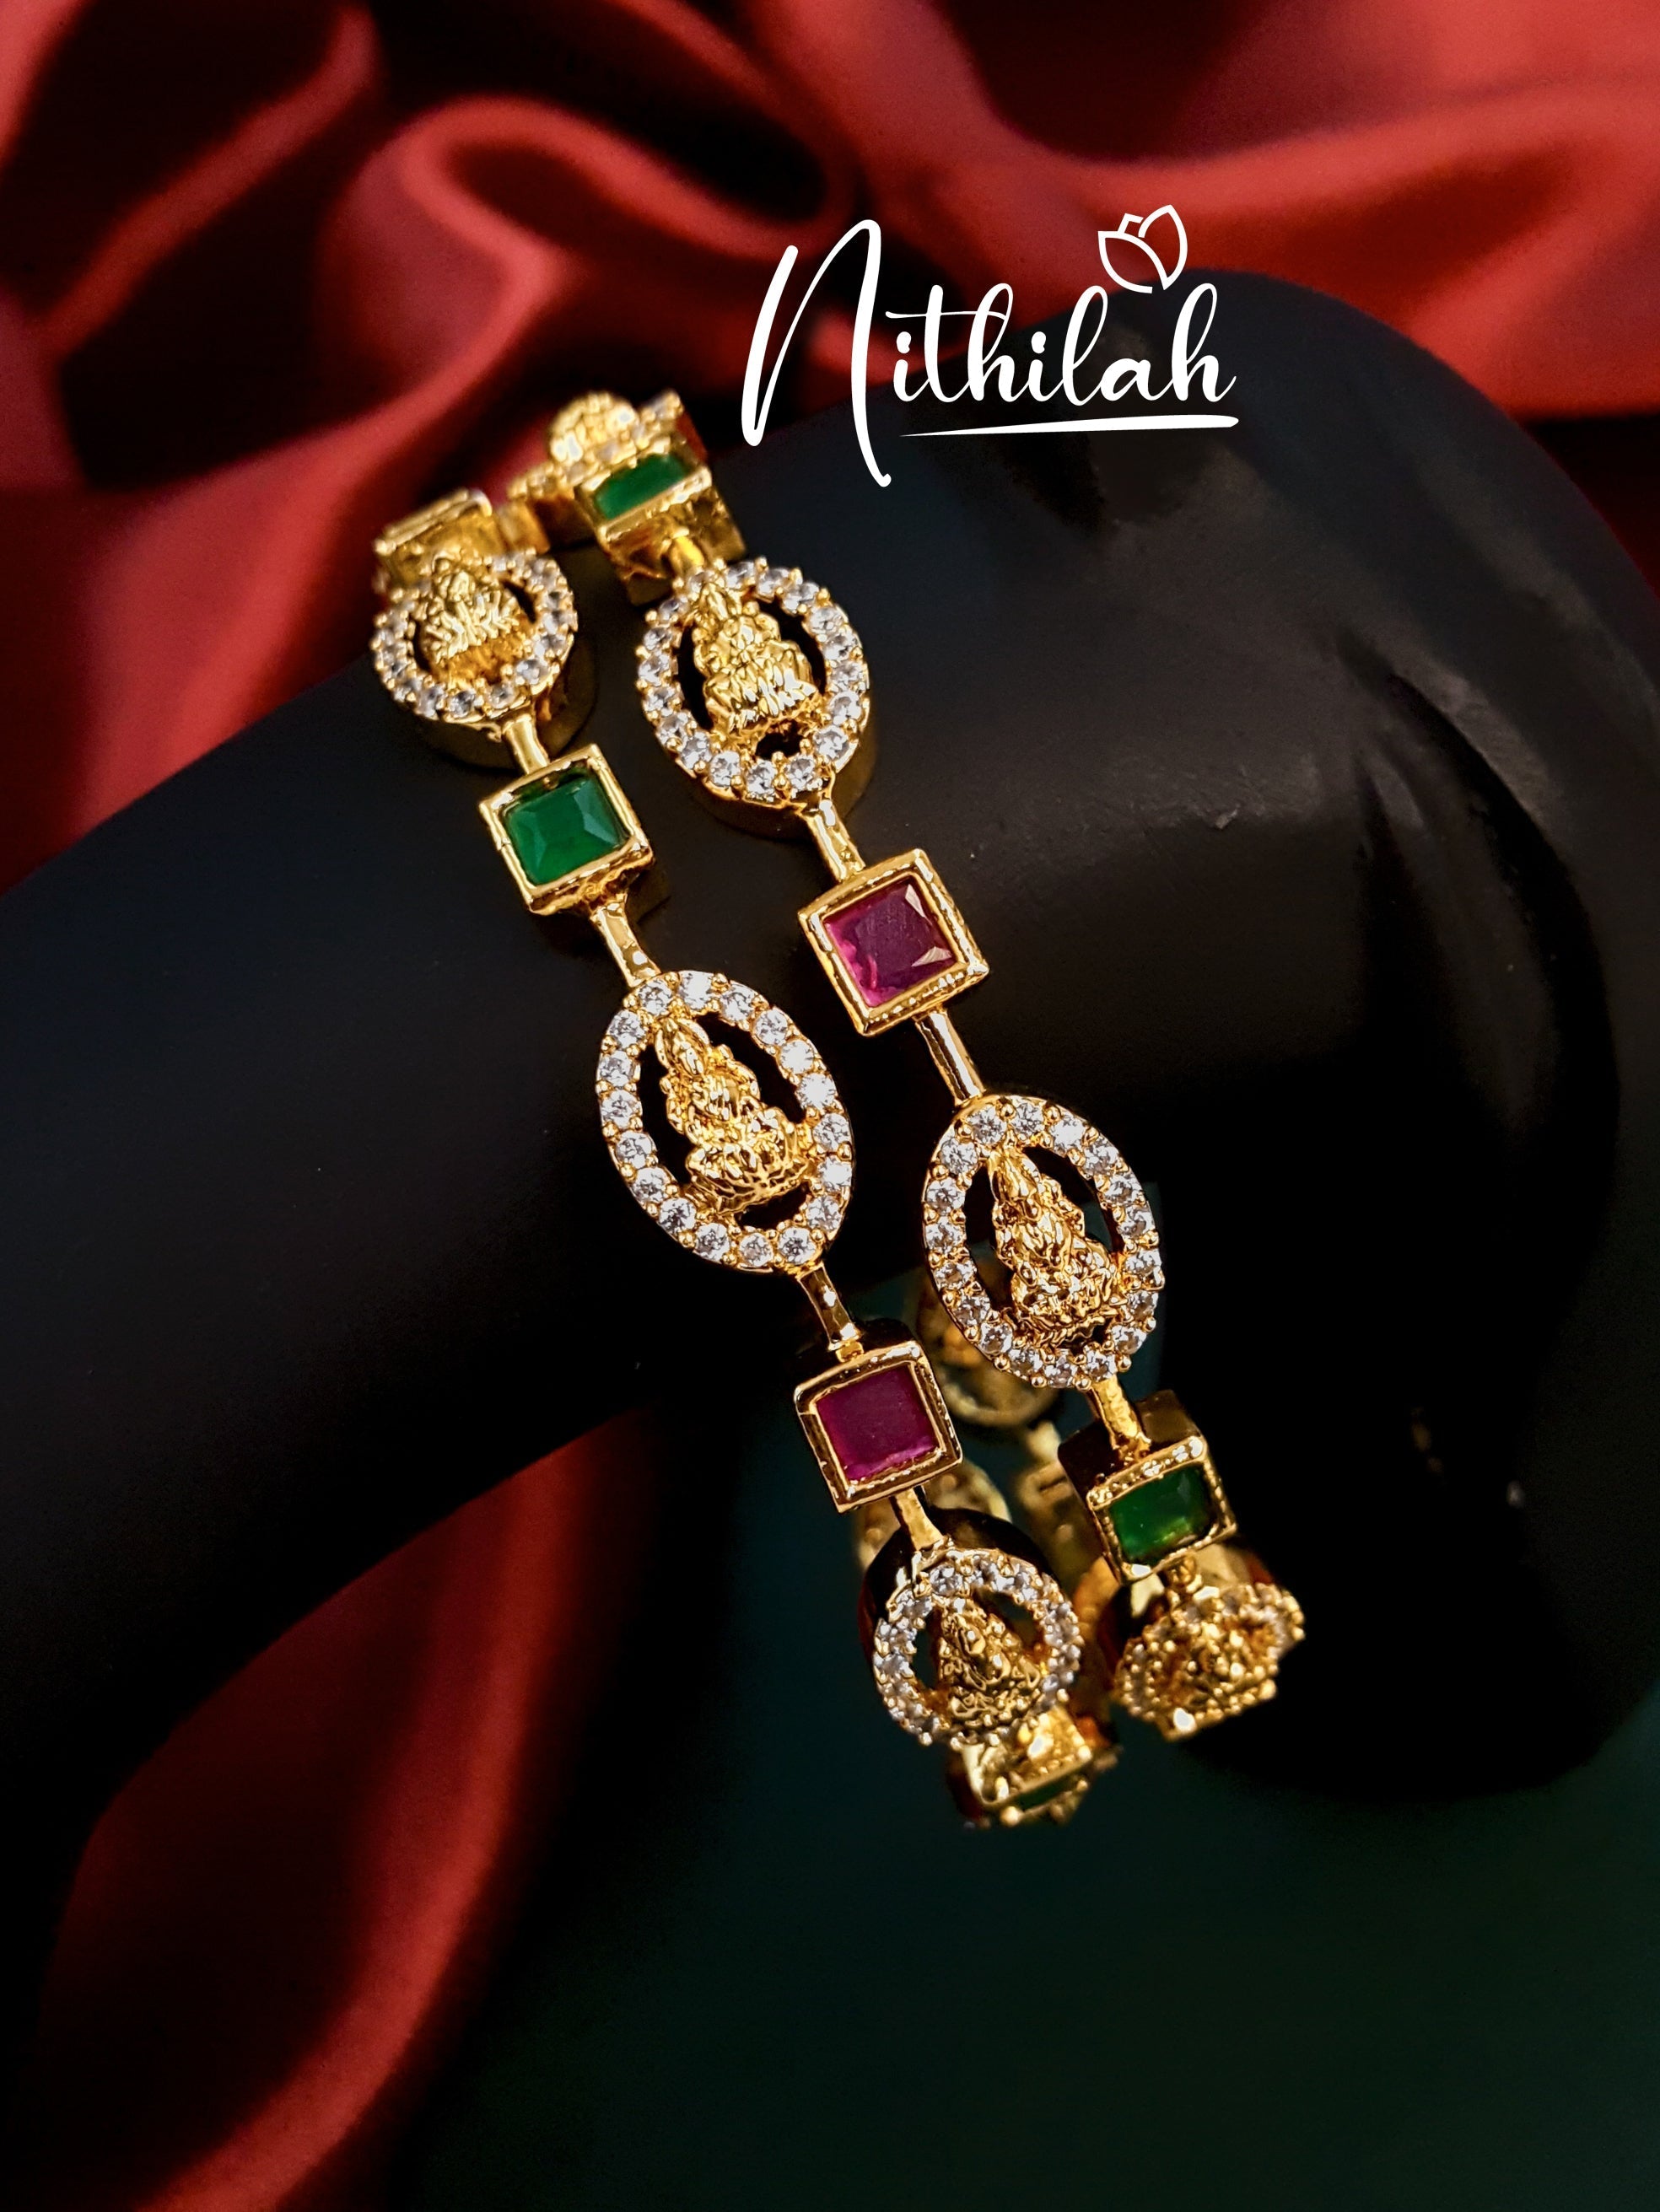 Buy Imitation Jewellery Gold Look alike AD stone Bangle 6B NCPL171 Online